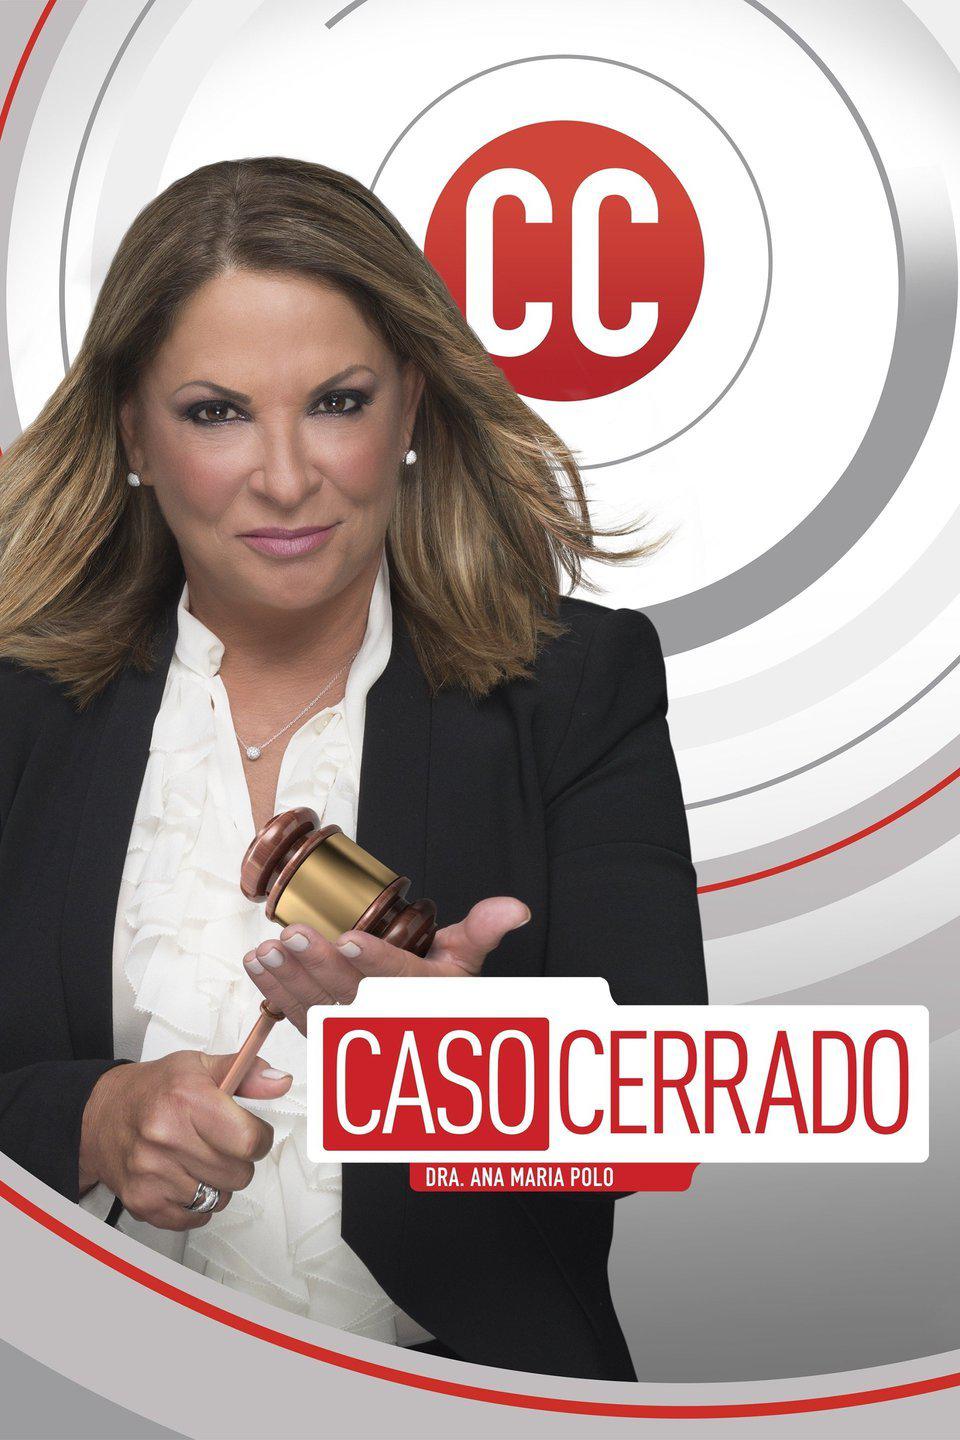 Caso Cerrado (Telemundo) United Kingdom daily TV audience insights for